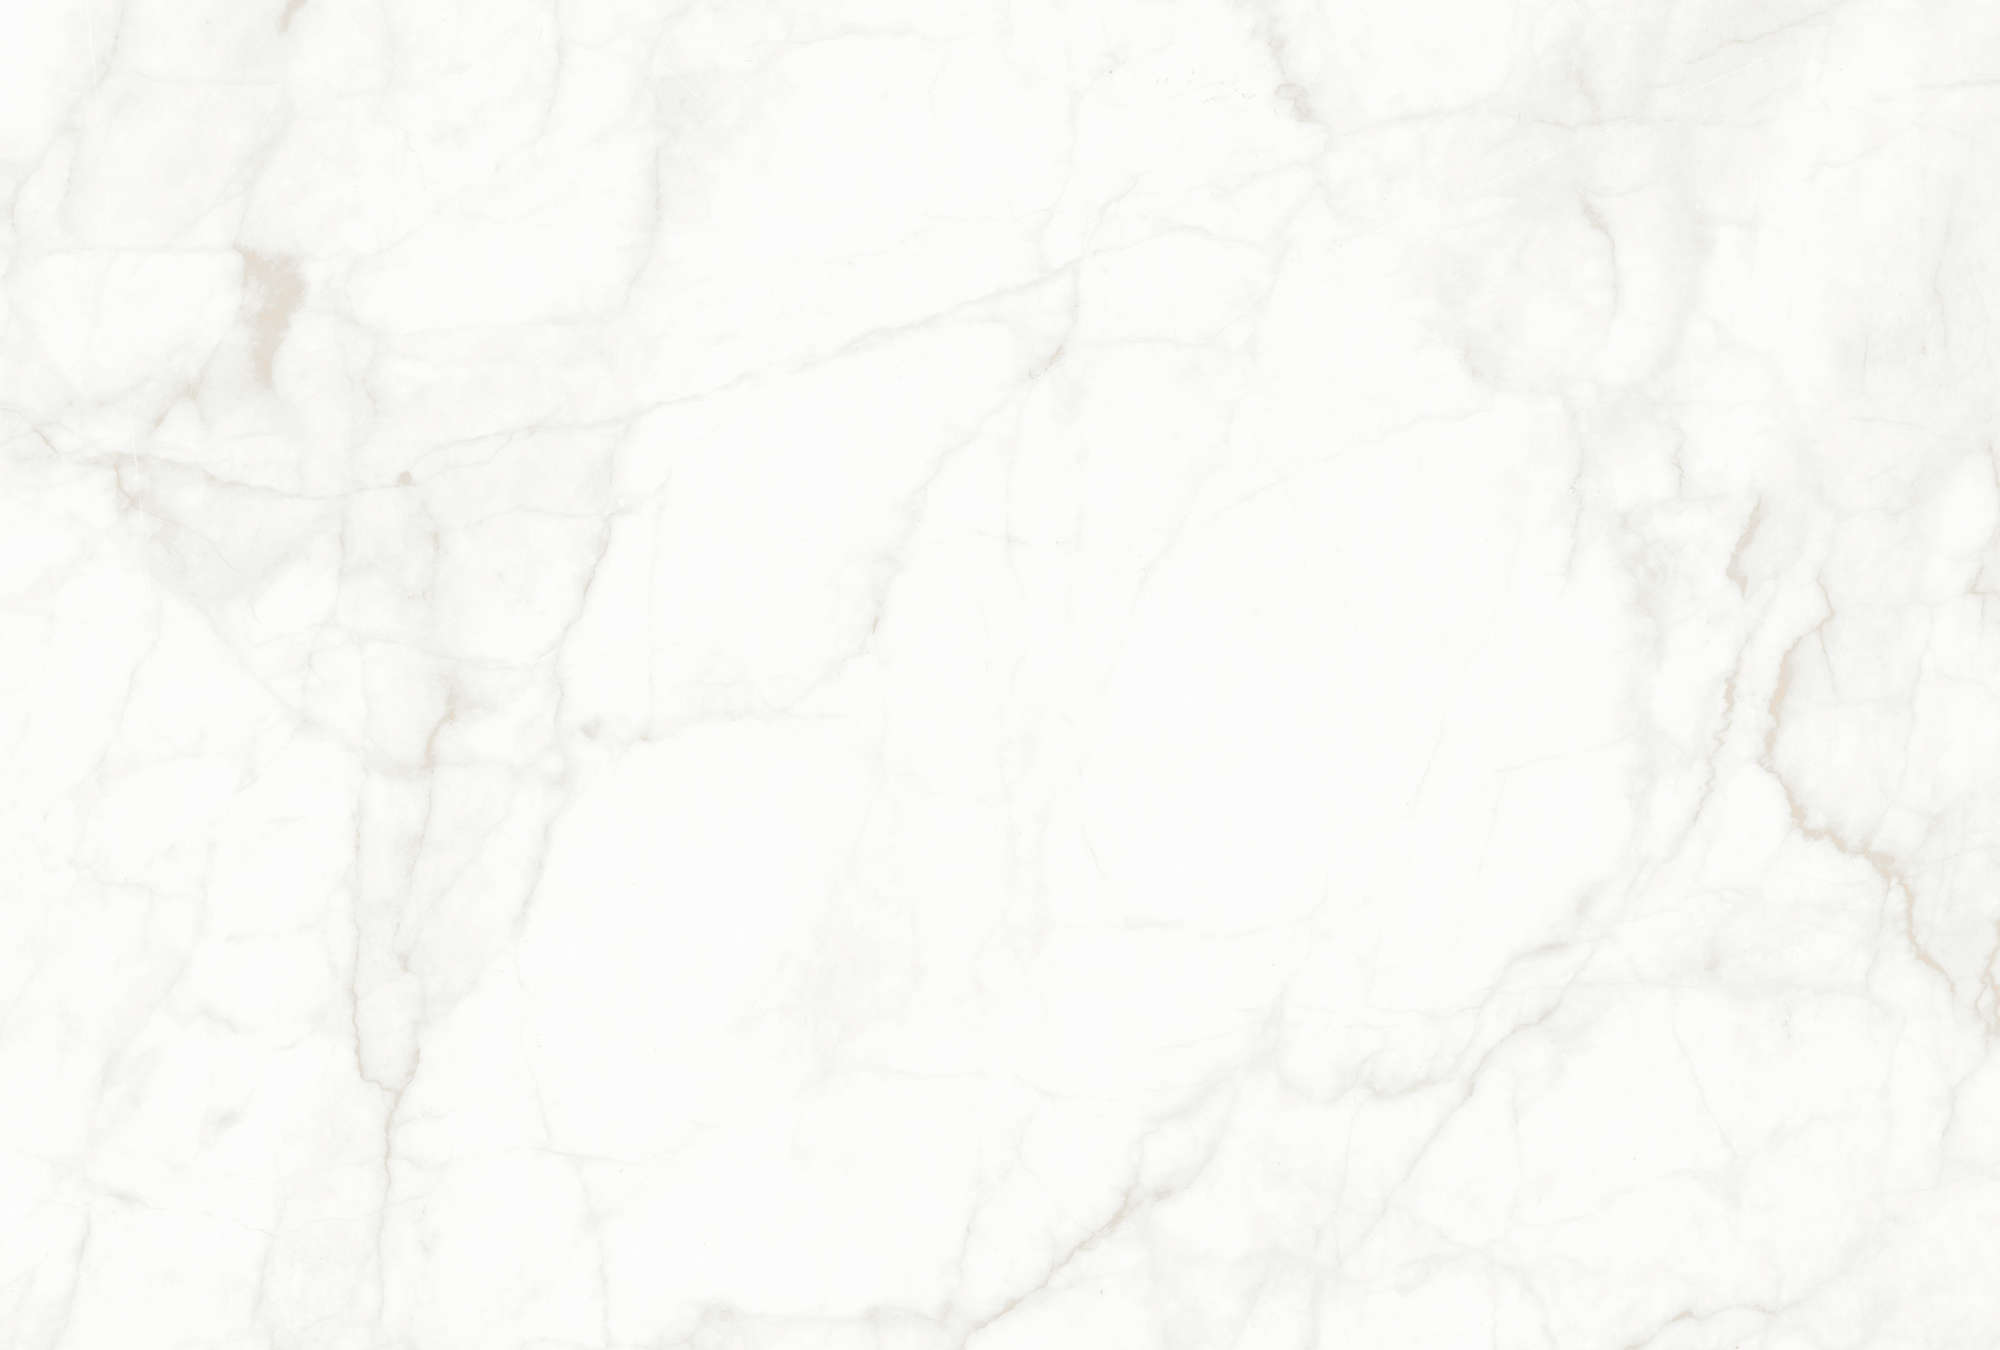             Marble wallpaper Greige @aenna_xoxo - white, grey, beige
        